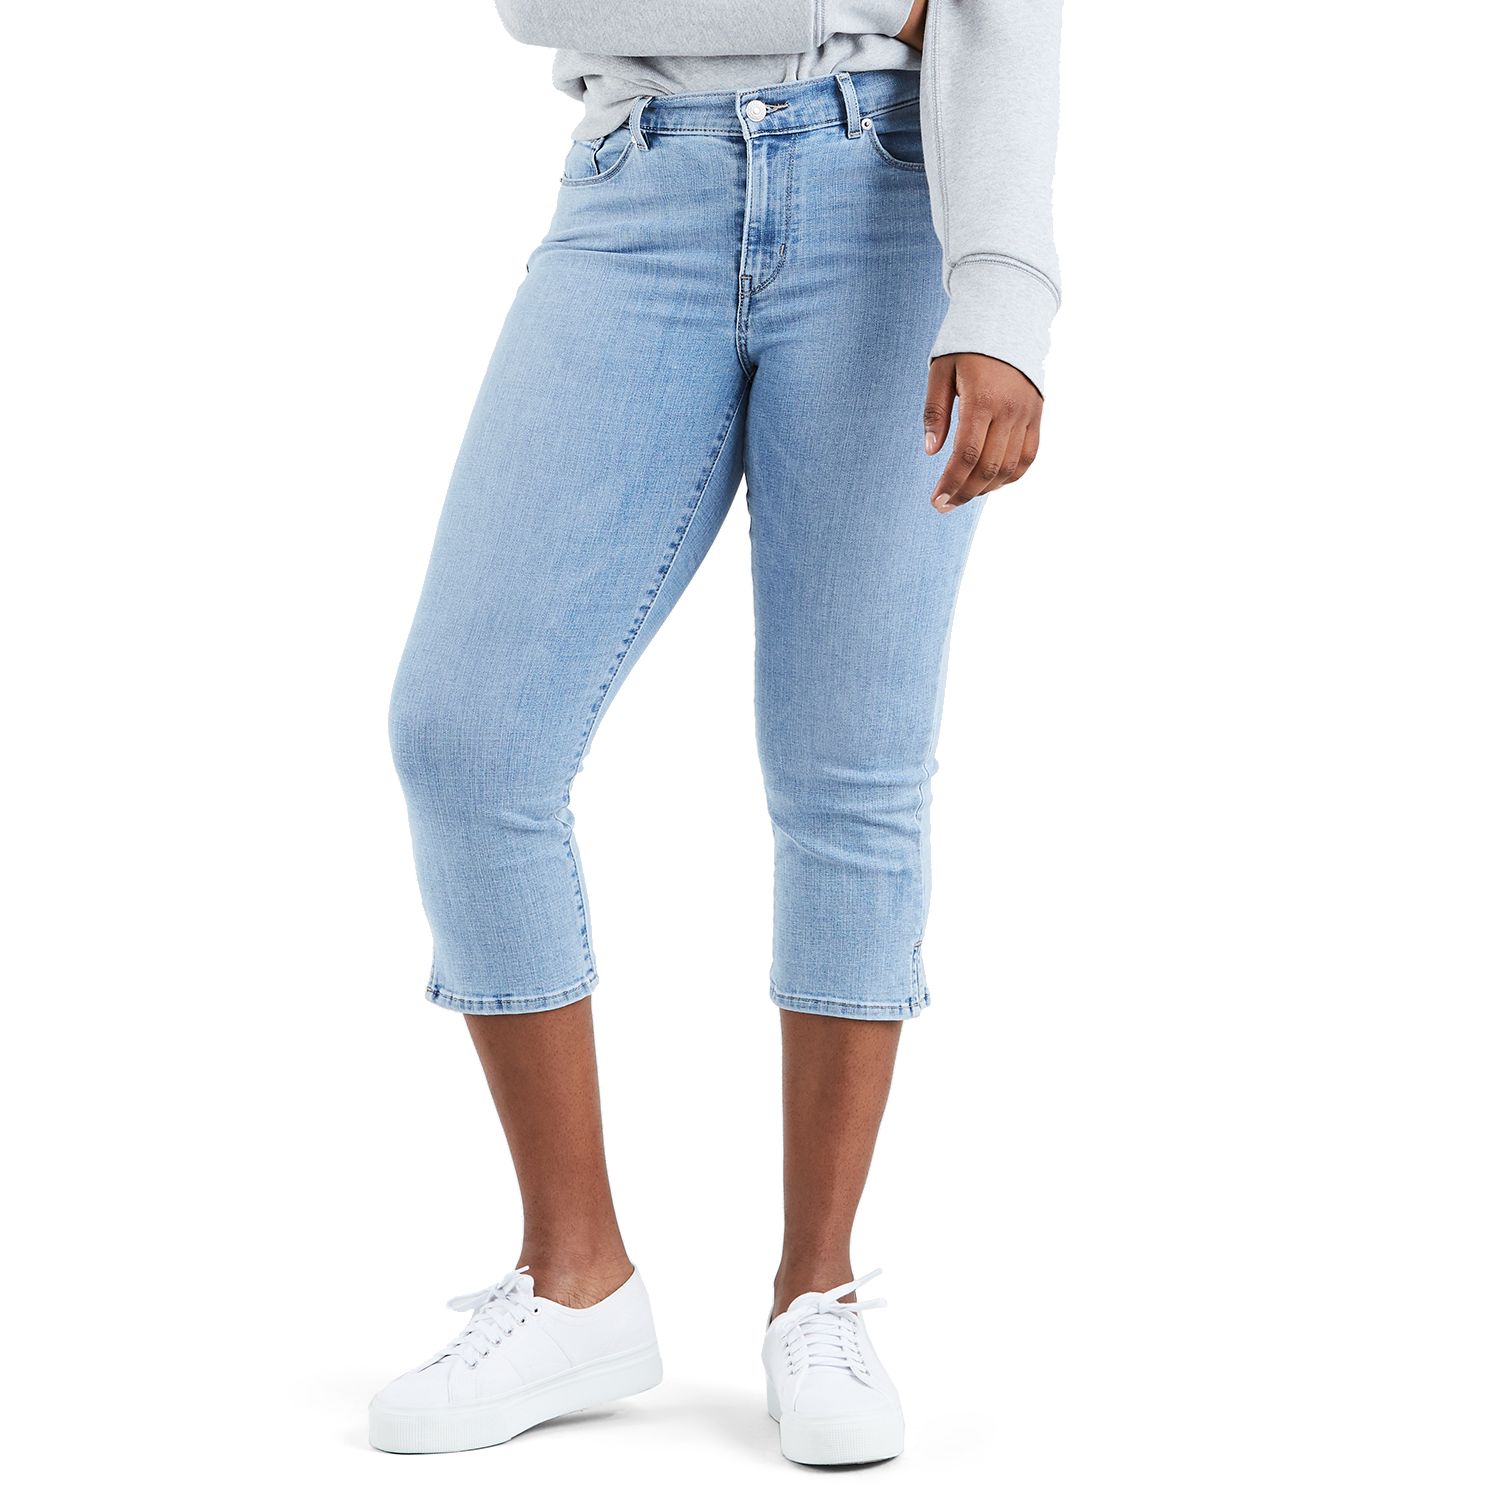 capri jeans with holes